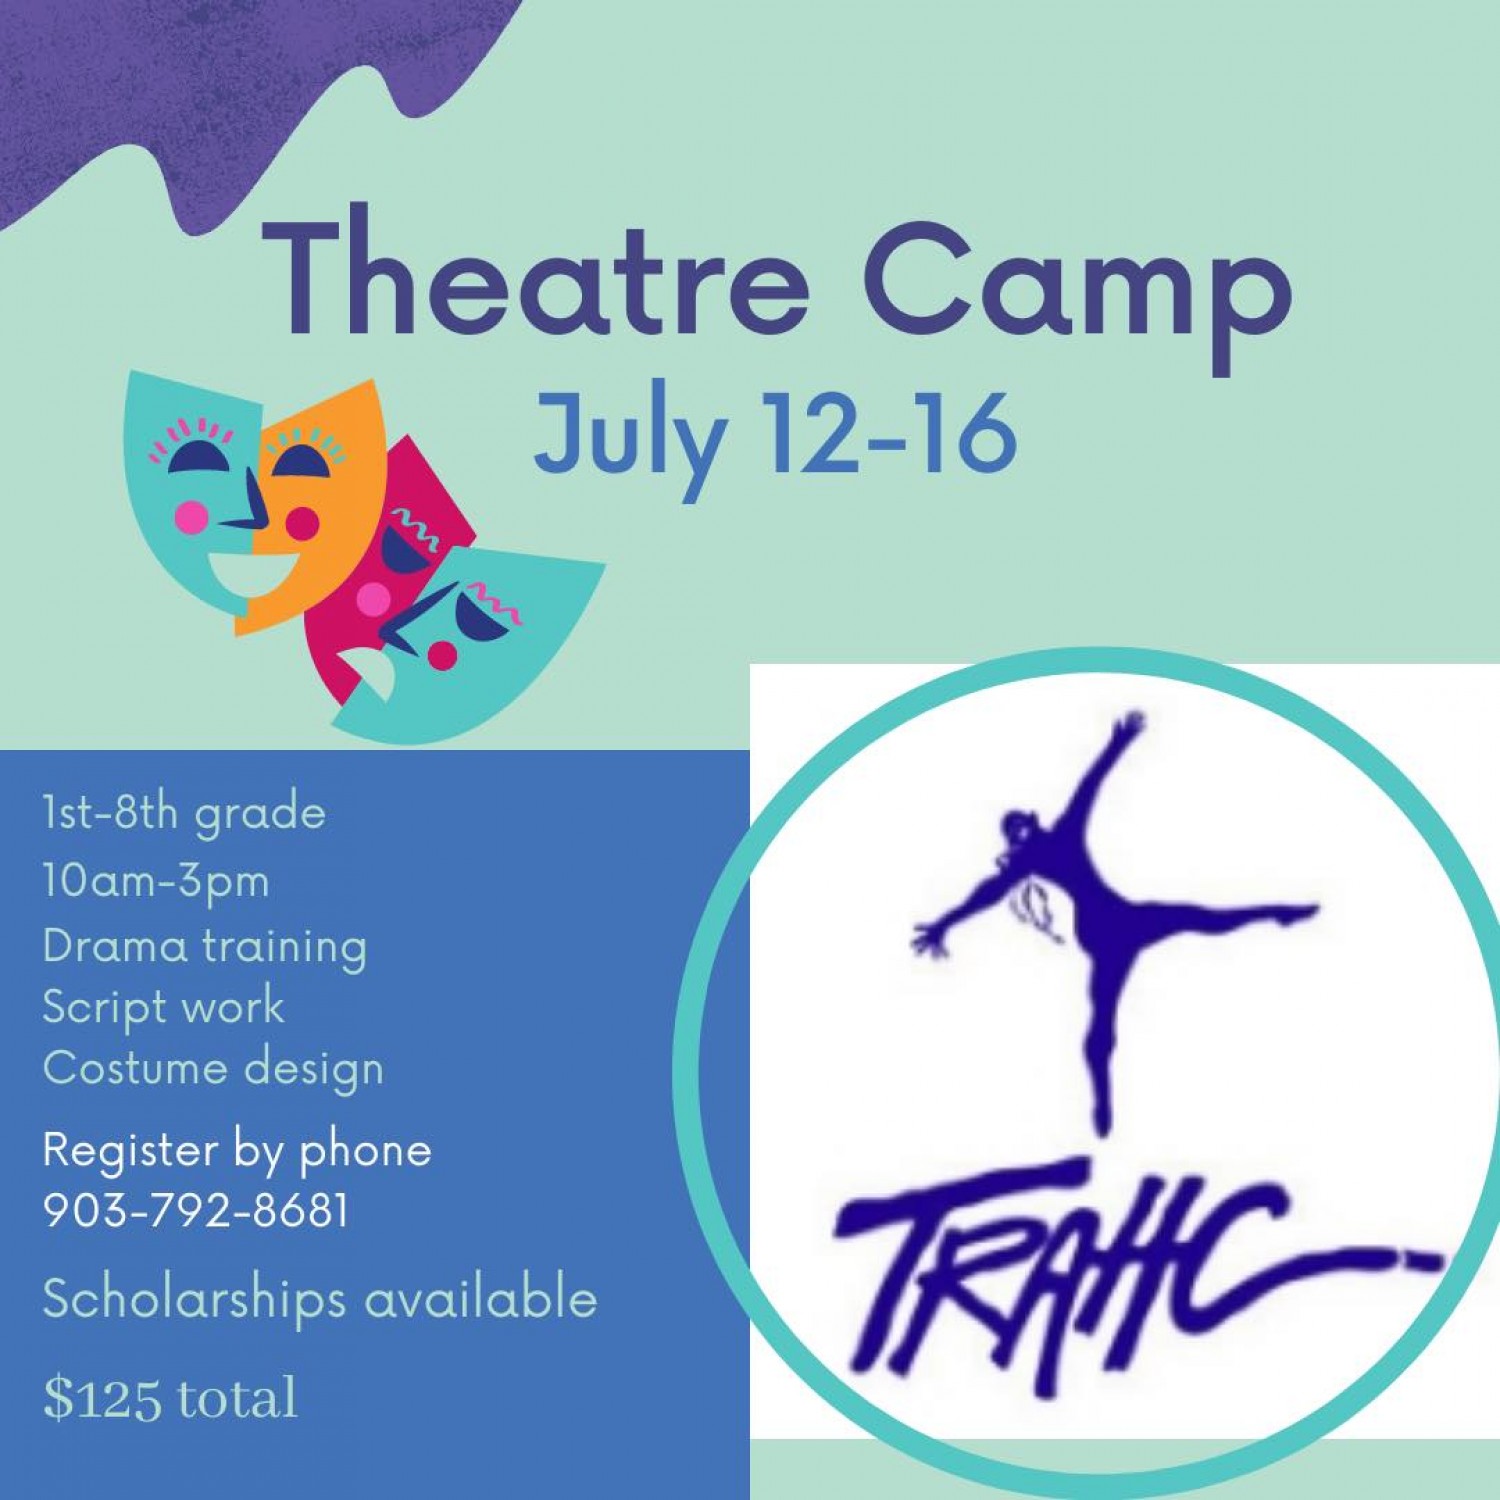 Theatre Camp ArtsSmart Events TRAHC Texarkana Regional Arts